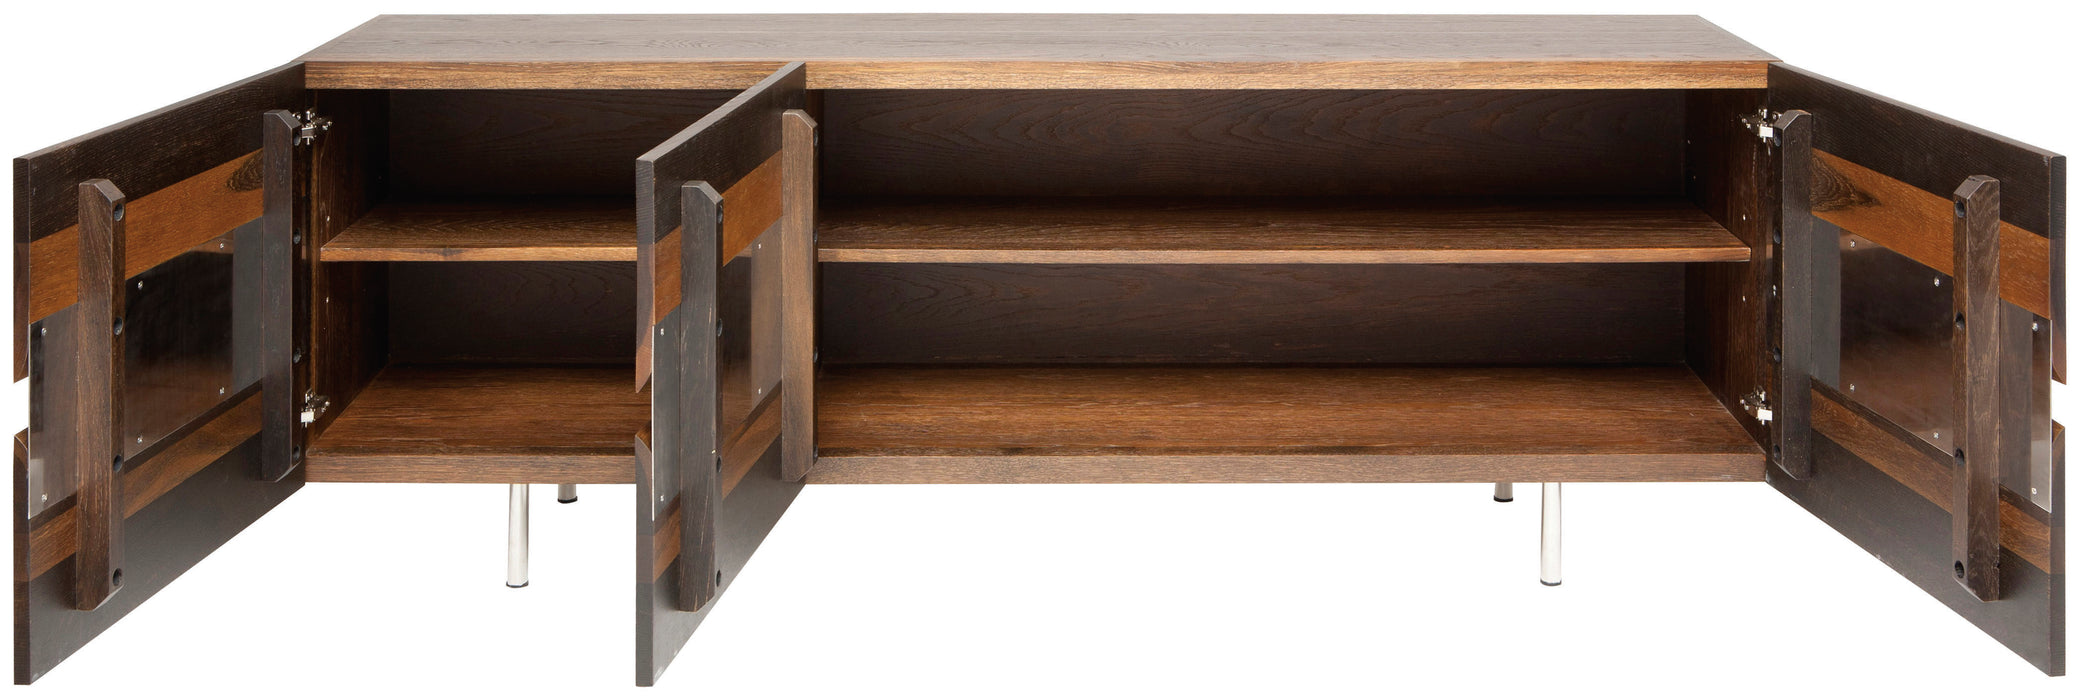 Sorrento PL Seared Sideboard Cabinet